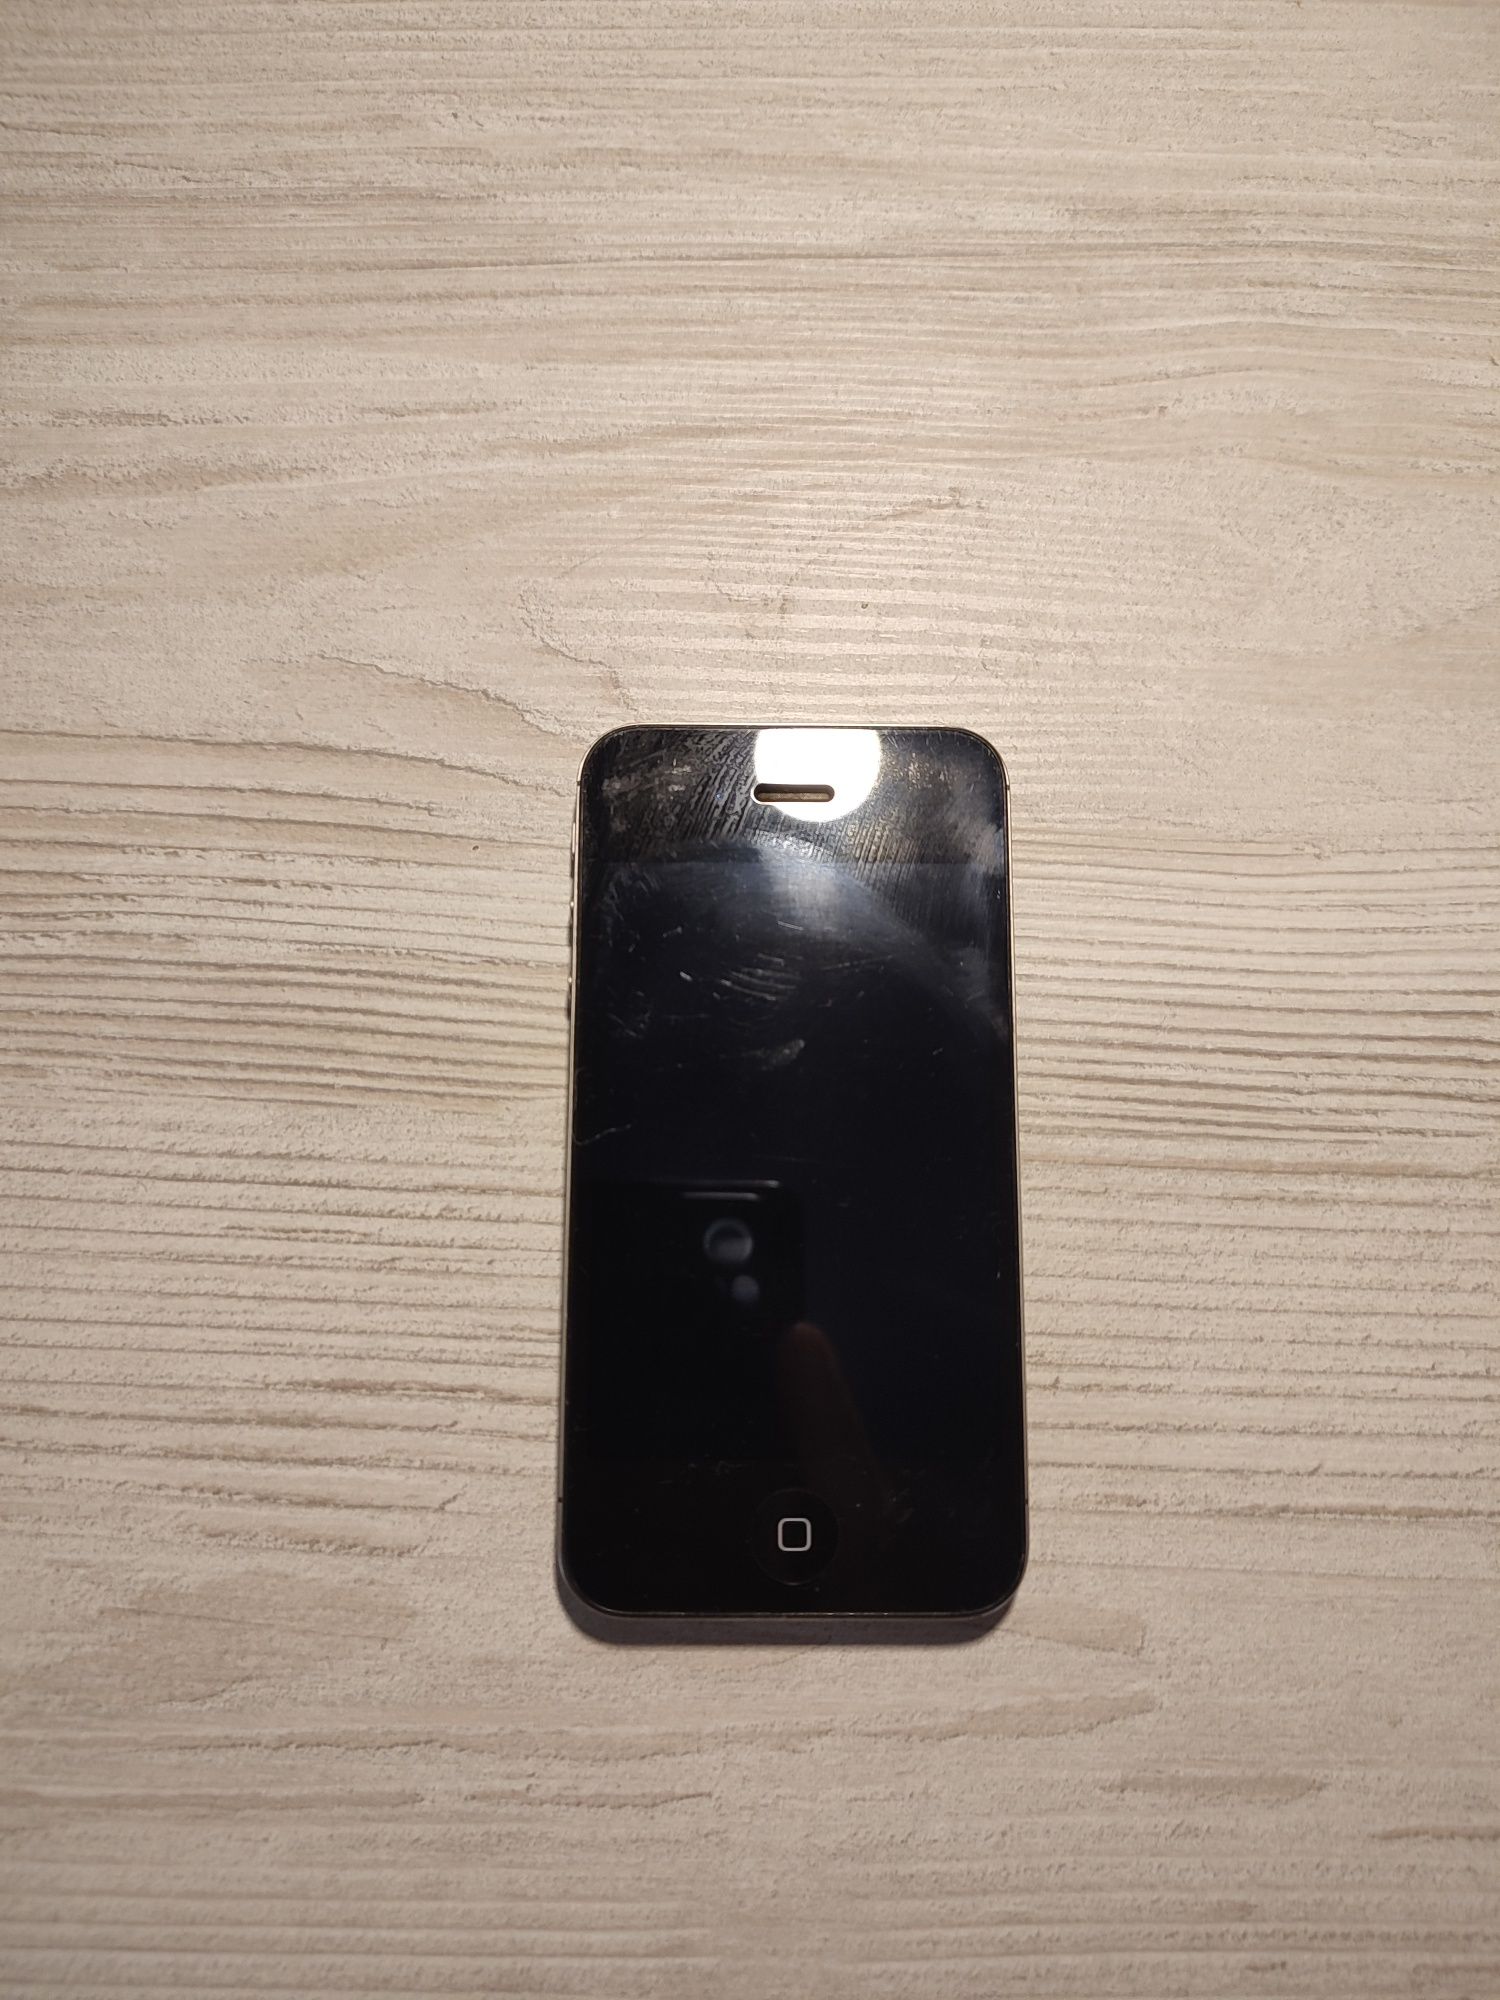 Iphone 4s 16 gb Neverlock